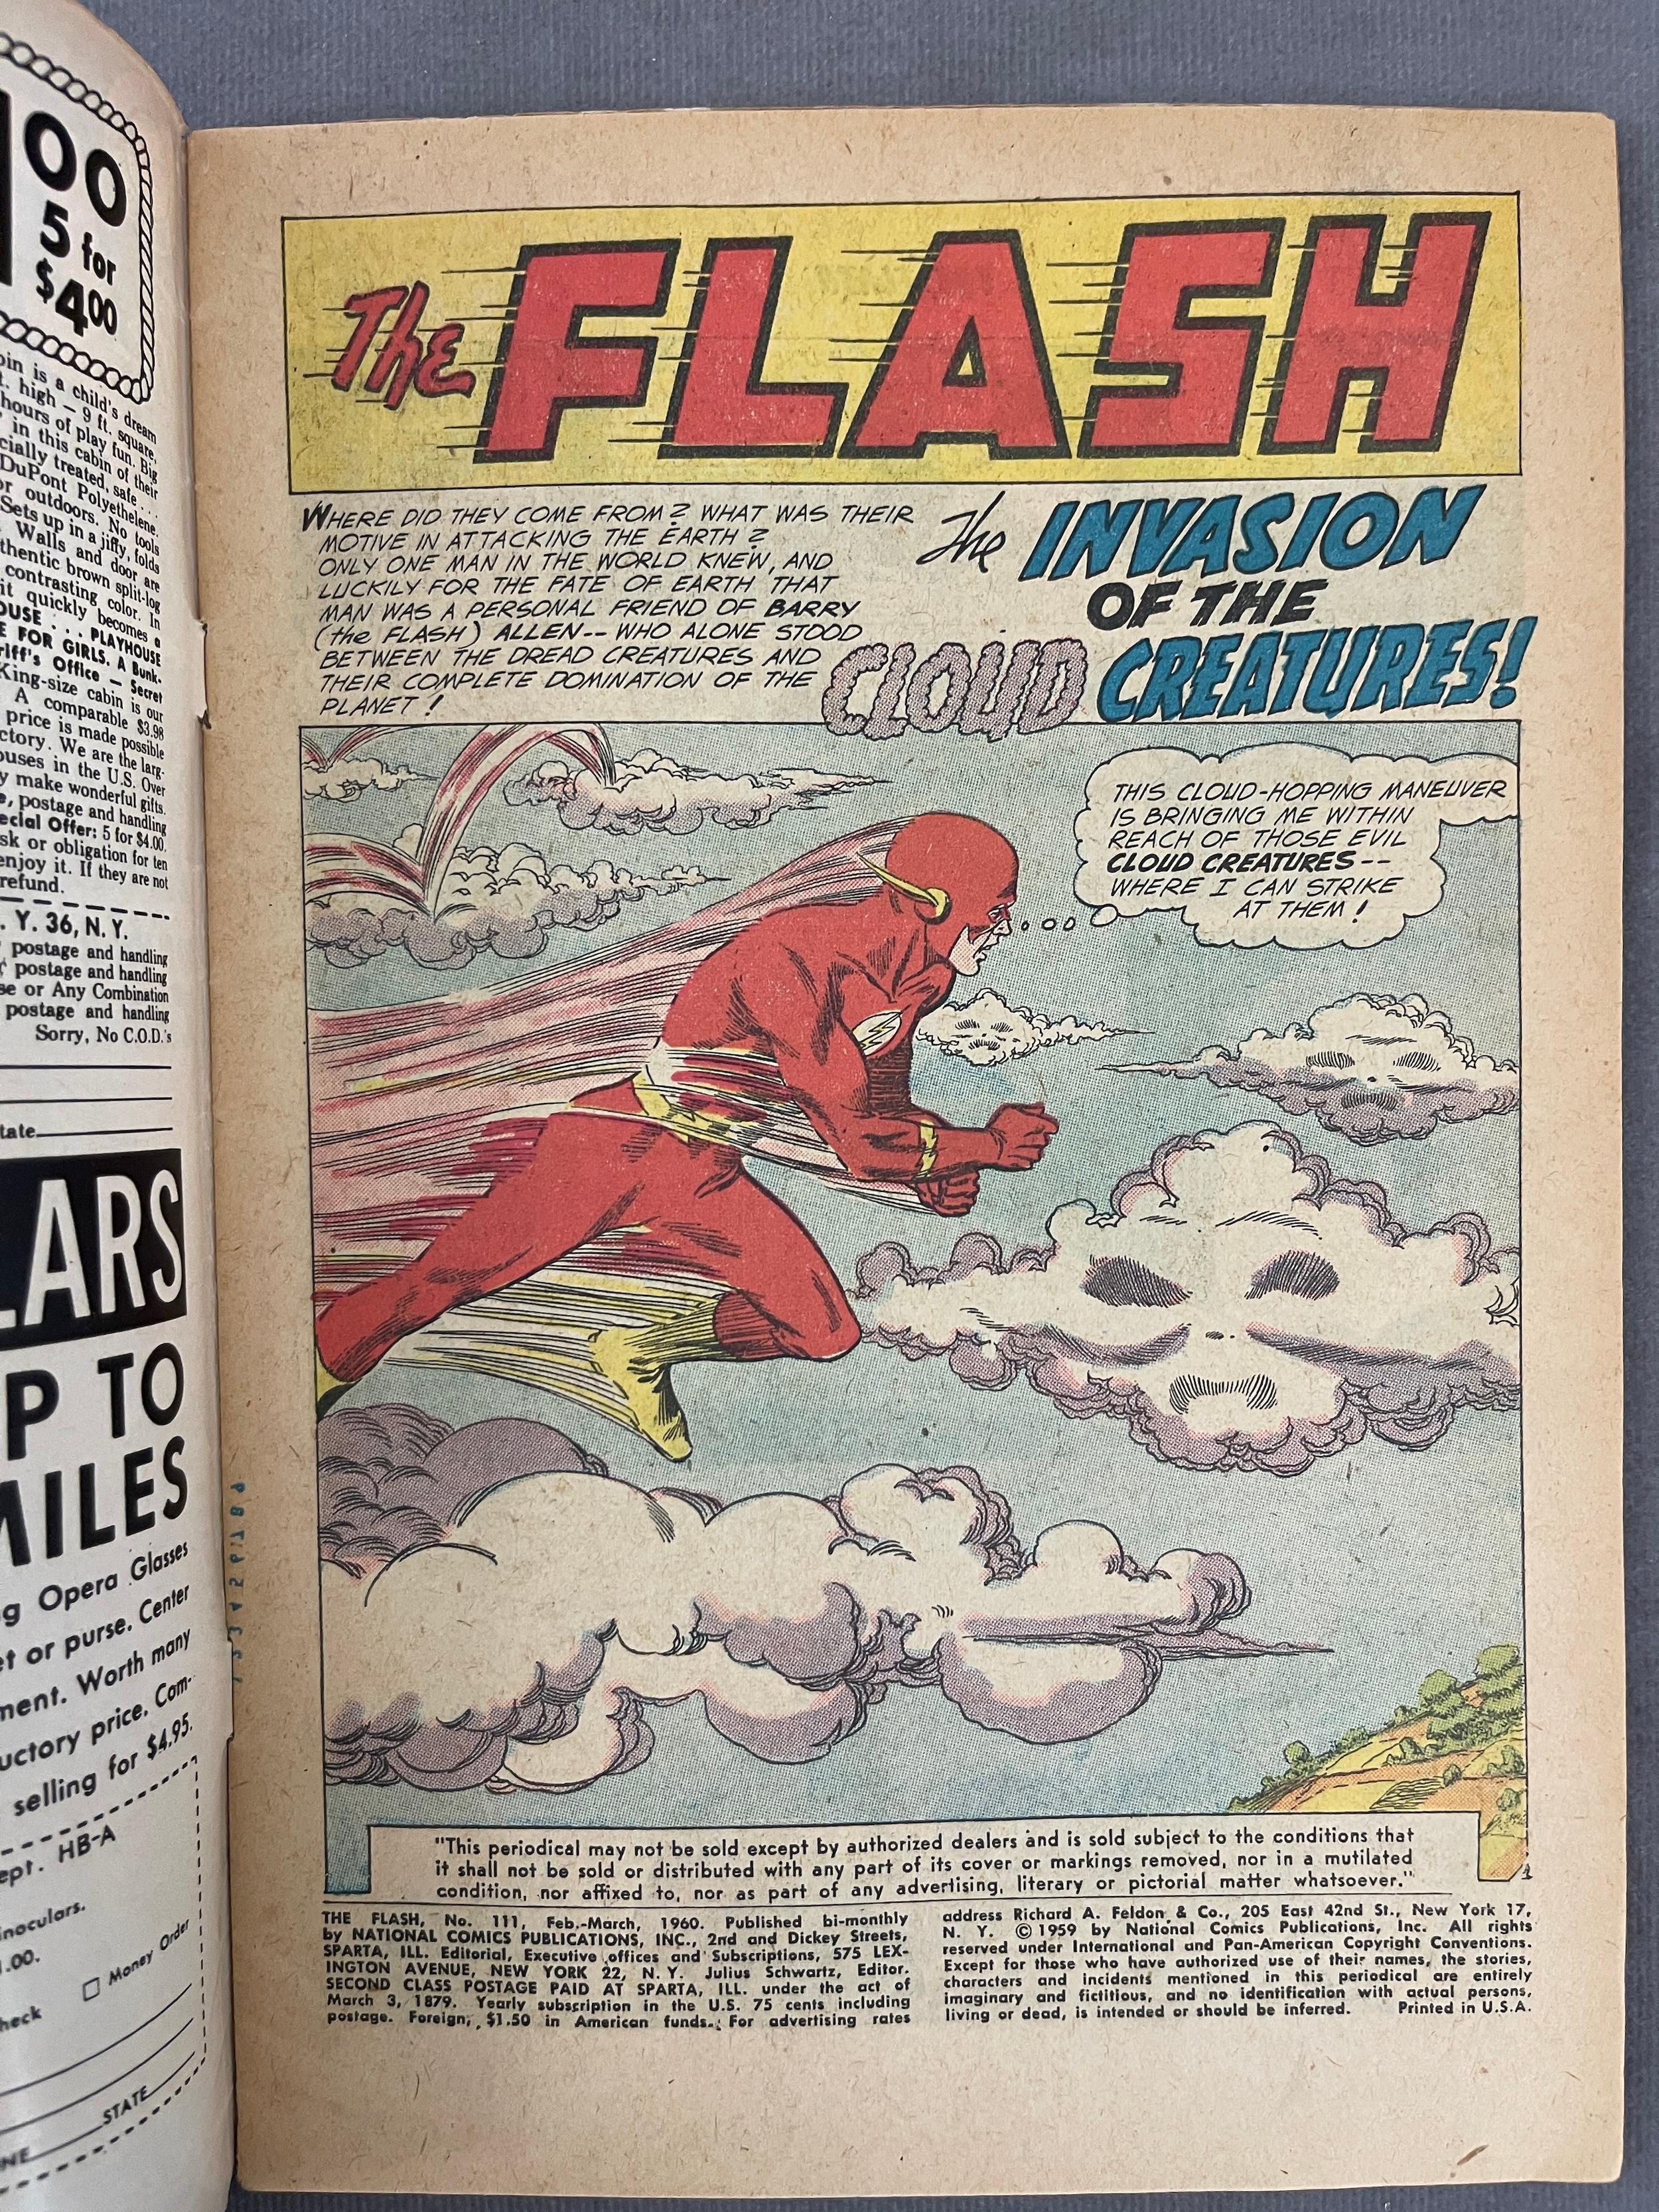 The Flash #111 1960 Marvel DC Comic Book